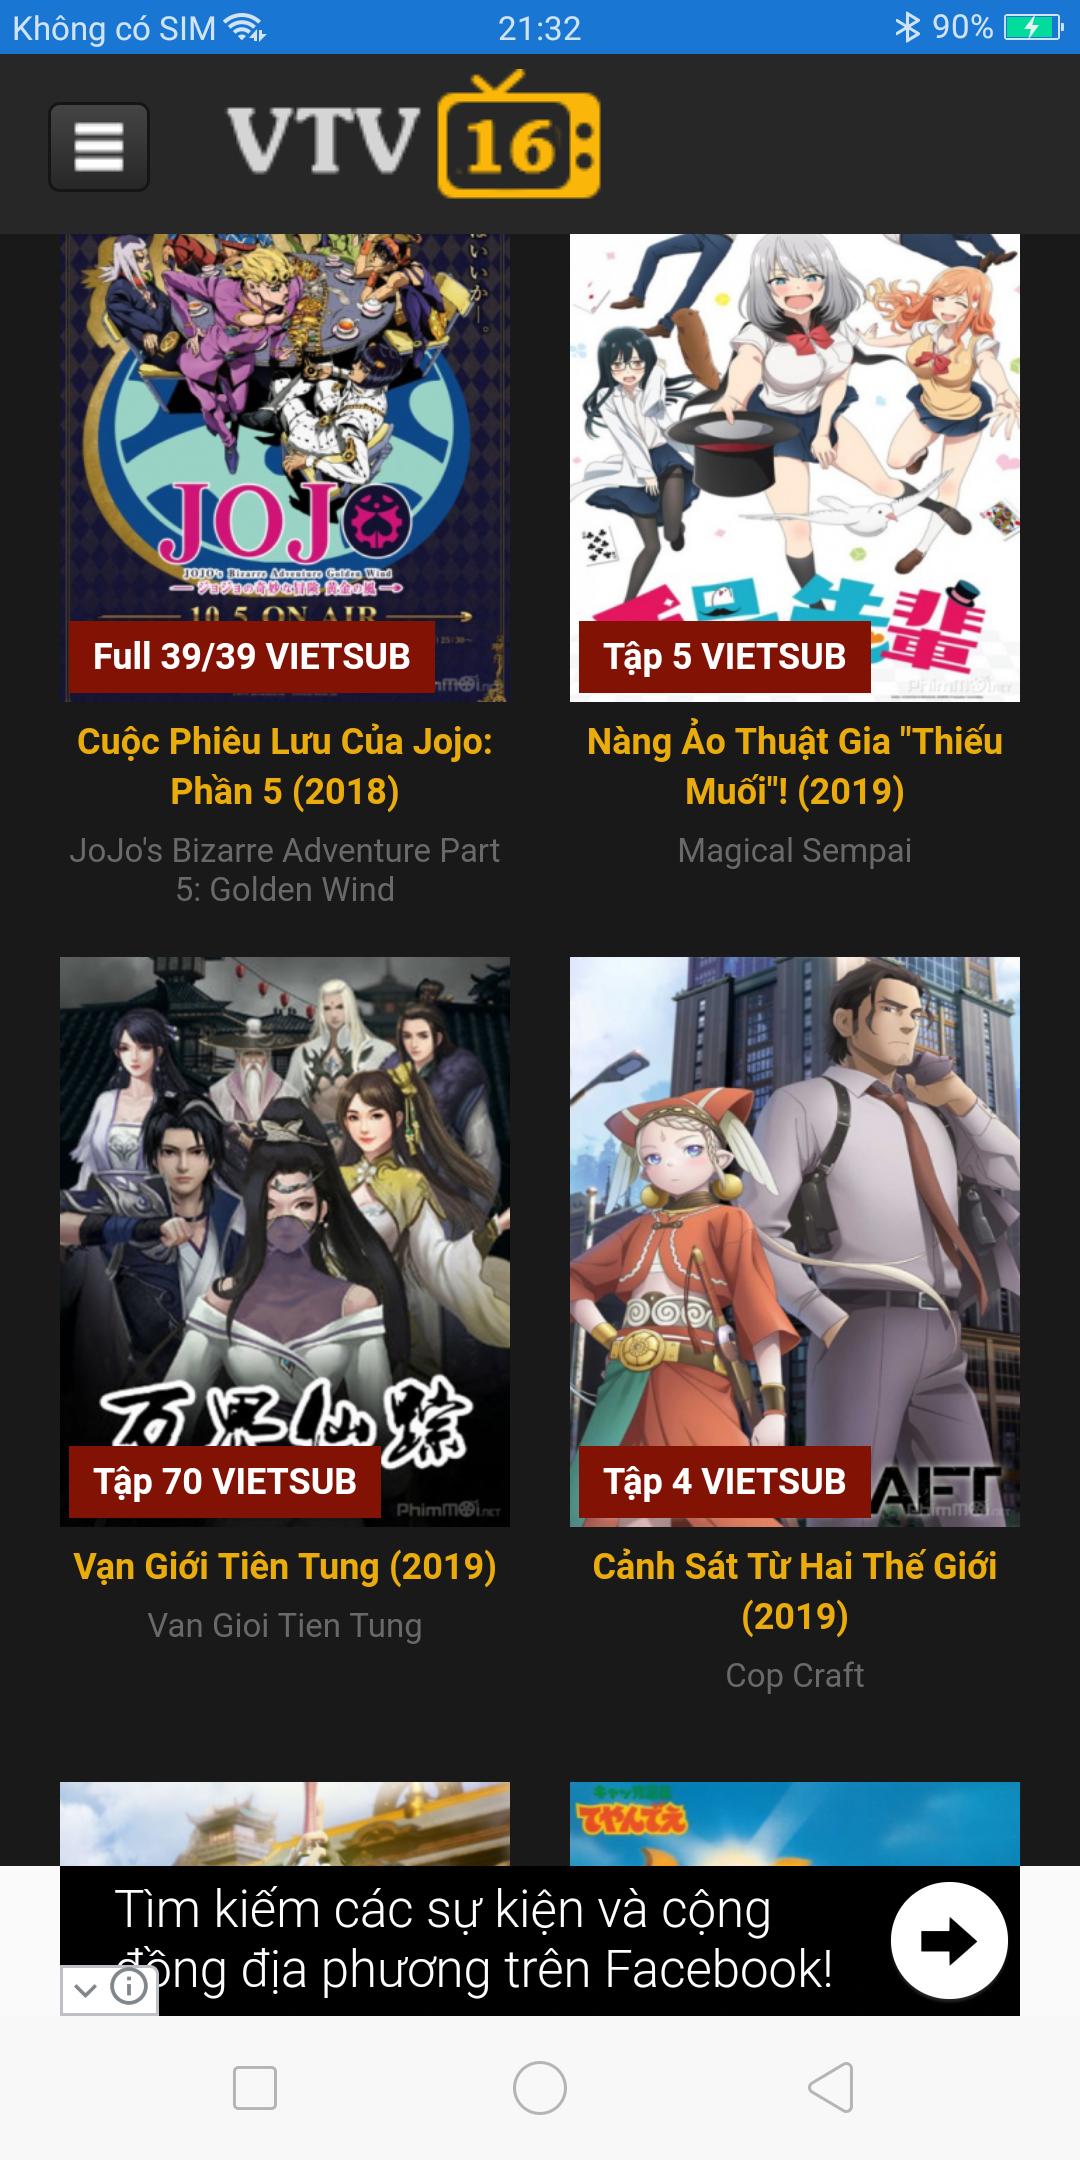 Anime Vietsub TV Apk Download for Android- Latest version 1.1.2-  com.japanApplicationQBM.AnimeVietsubTV